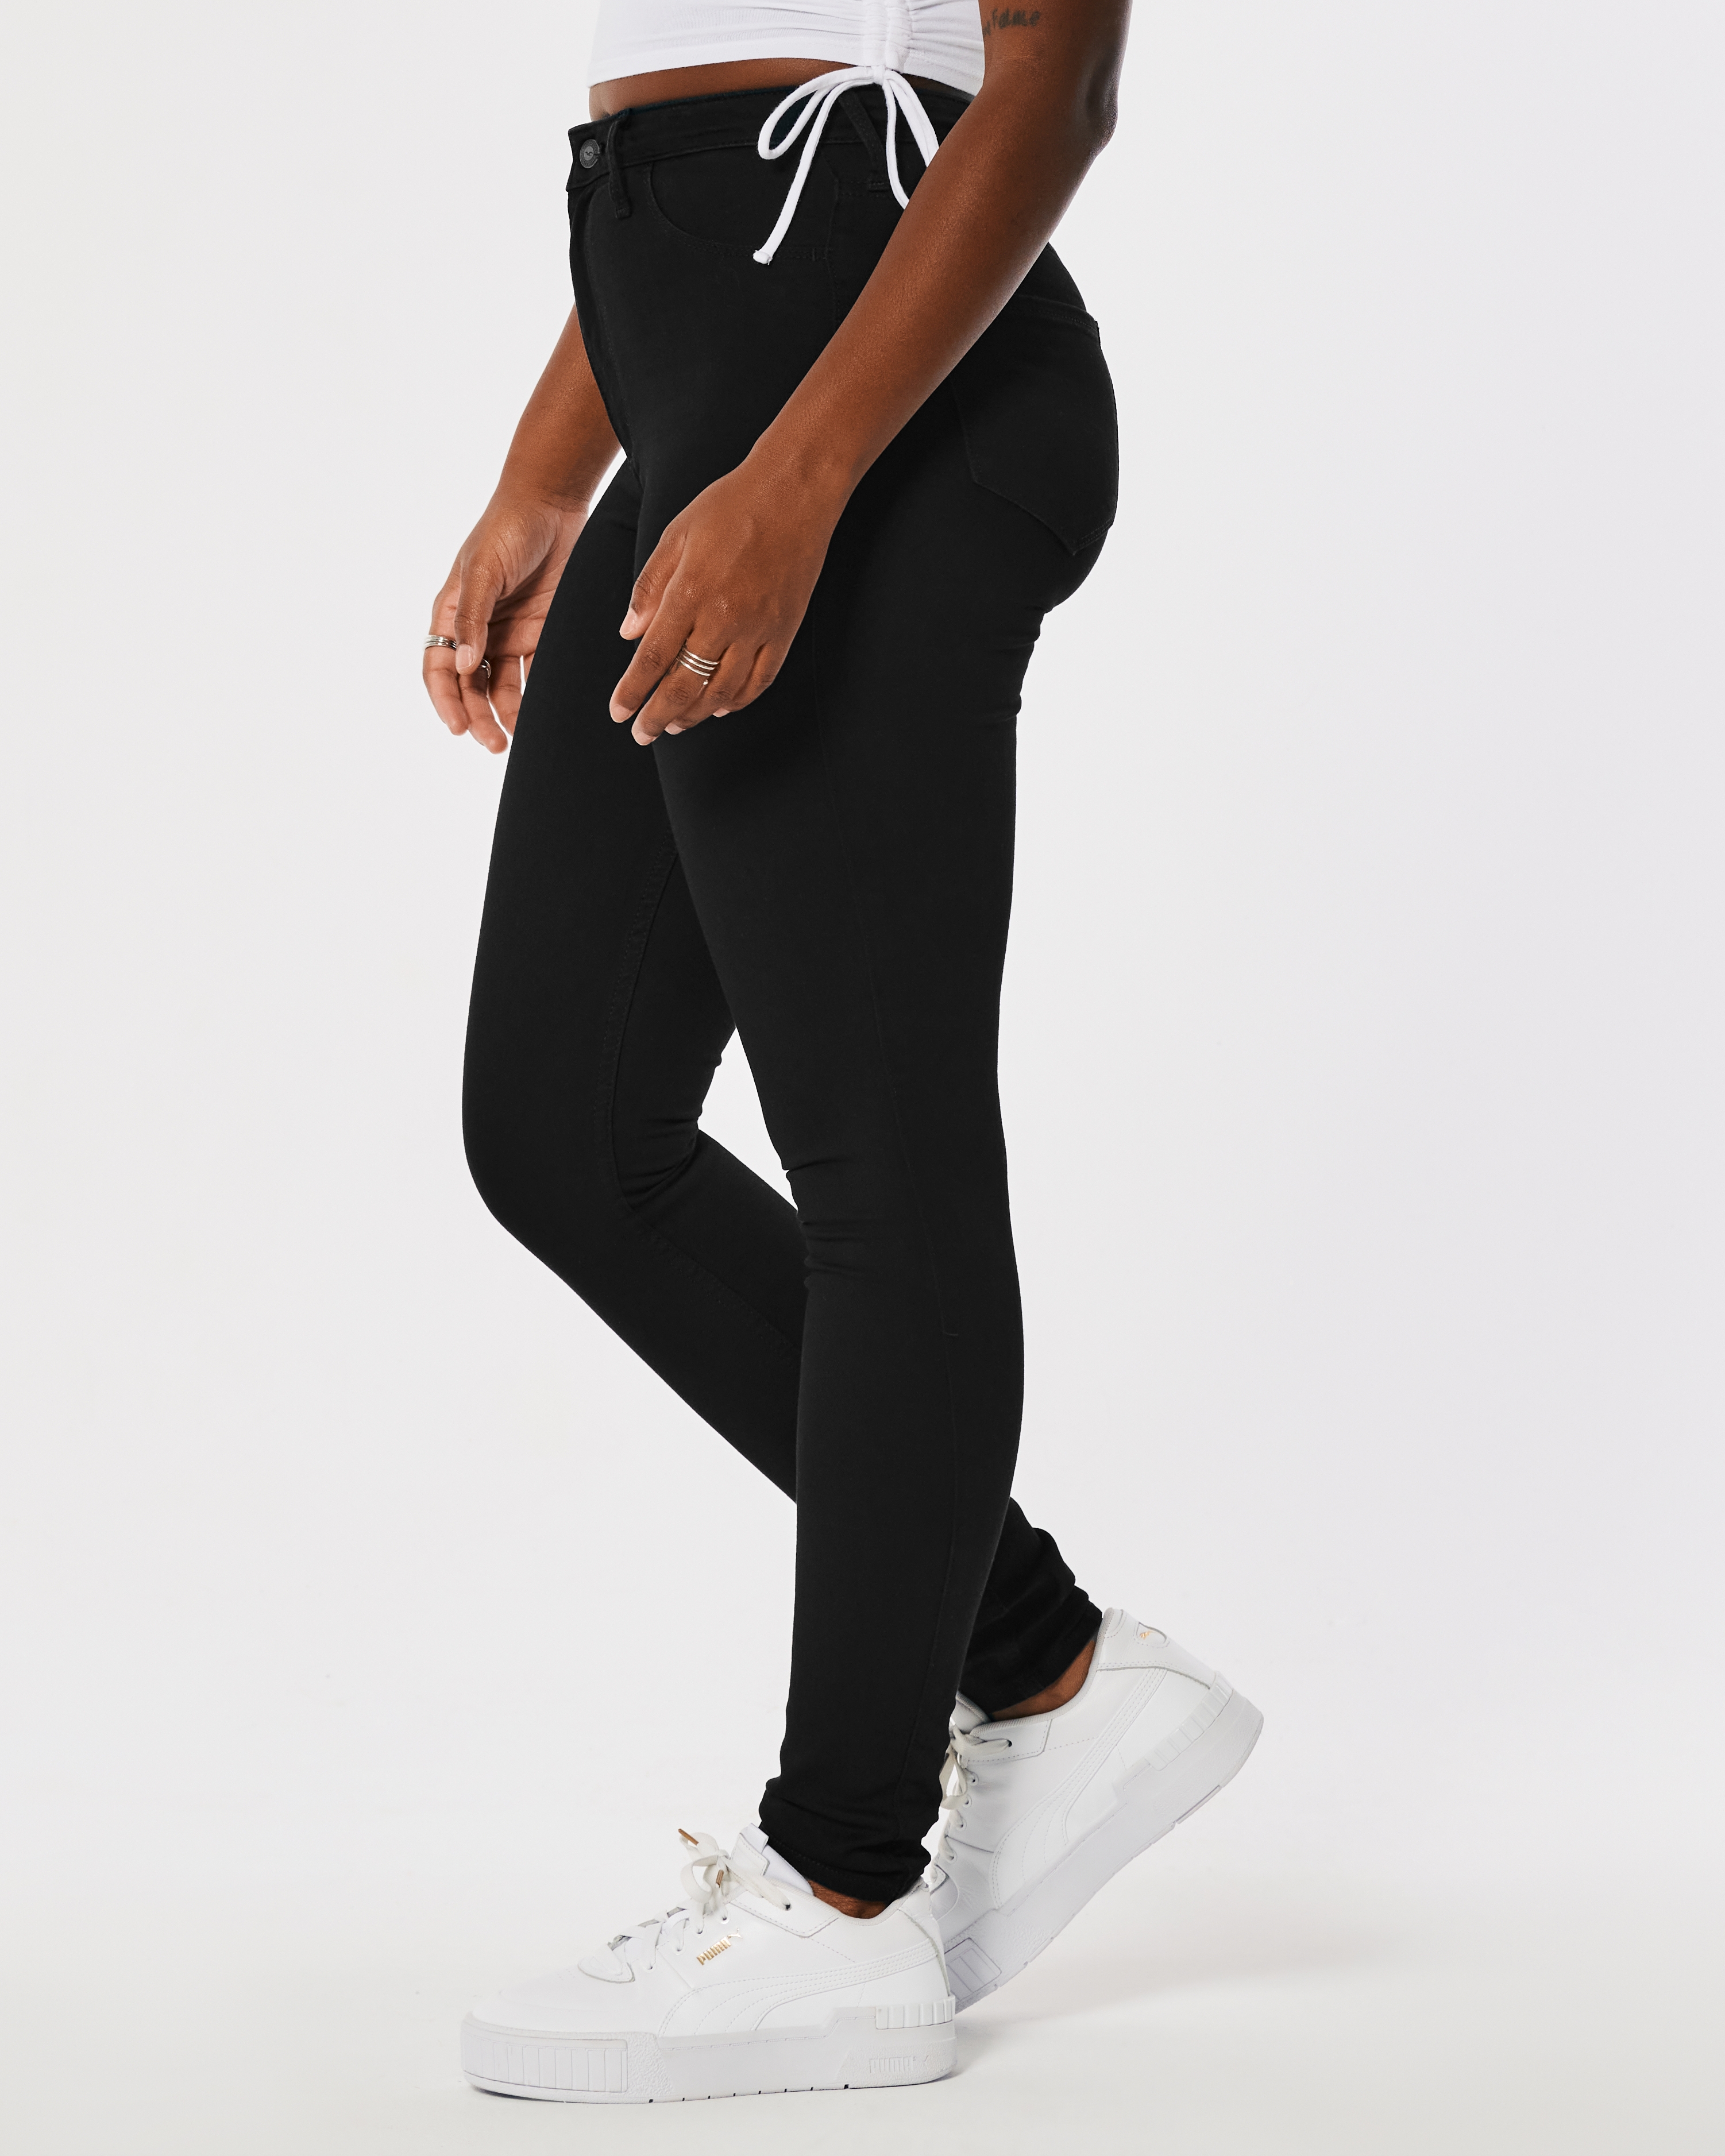 Women's Ultra High-Rise Black Jean Leggings